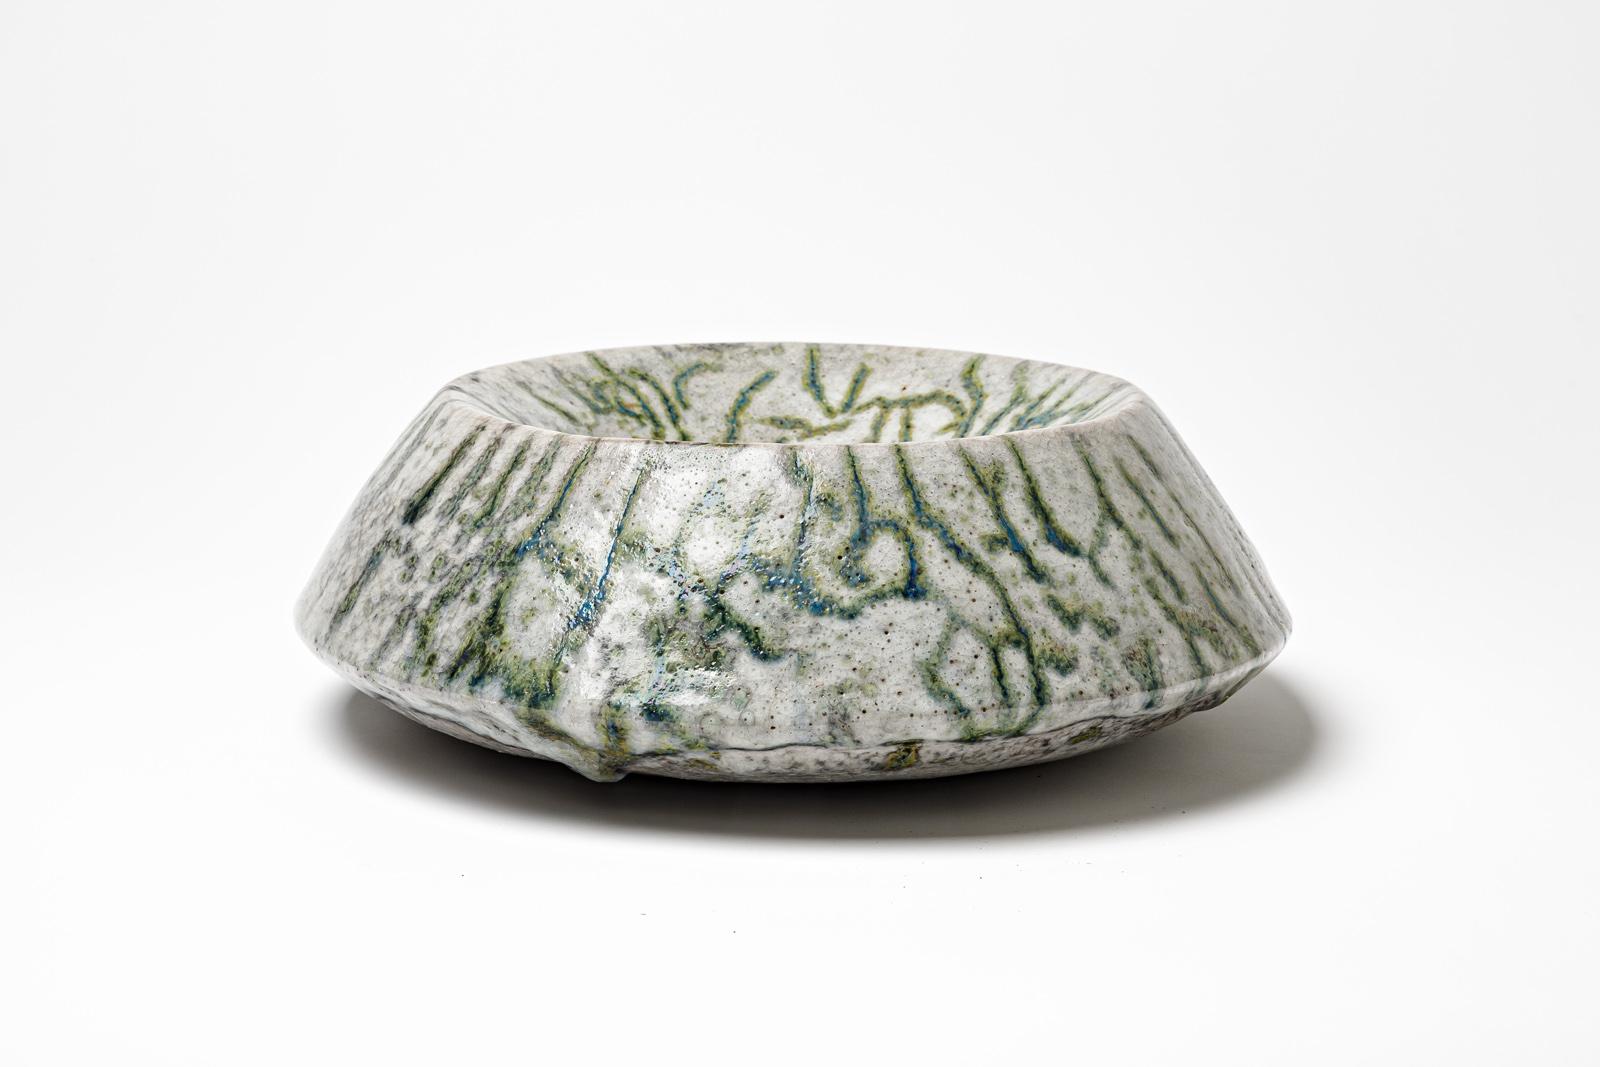 Green and white glazed ceramic cup by Gisèle Buthod Garçon. 
Raku fired. Artist monogram under the base. Circa 1980-1990. 
H : 4.7’ x 12.6’ inches.